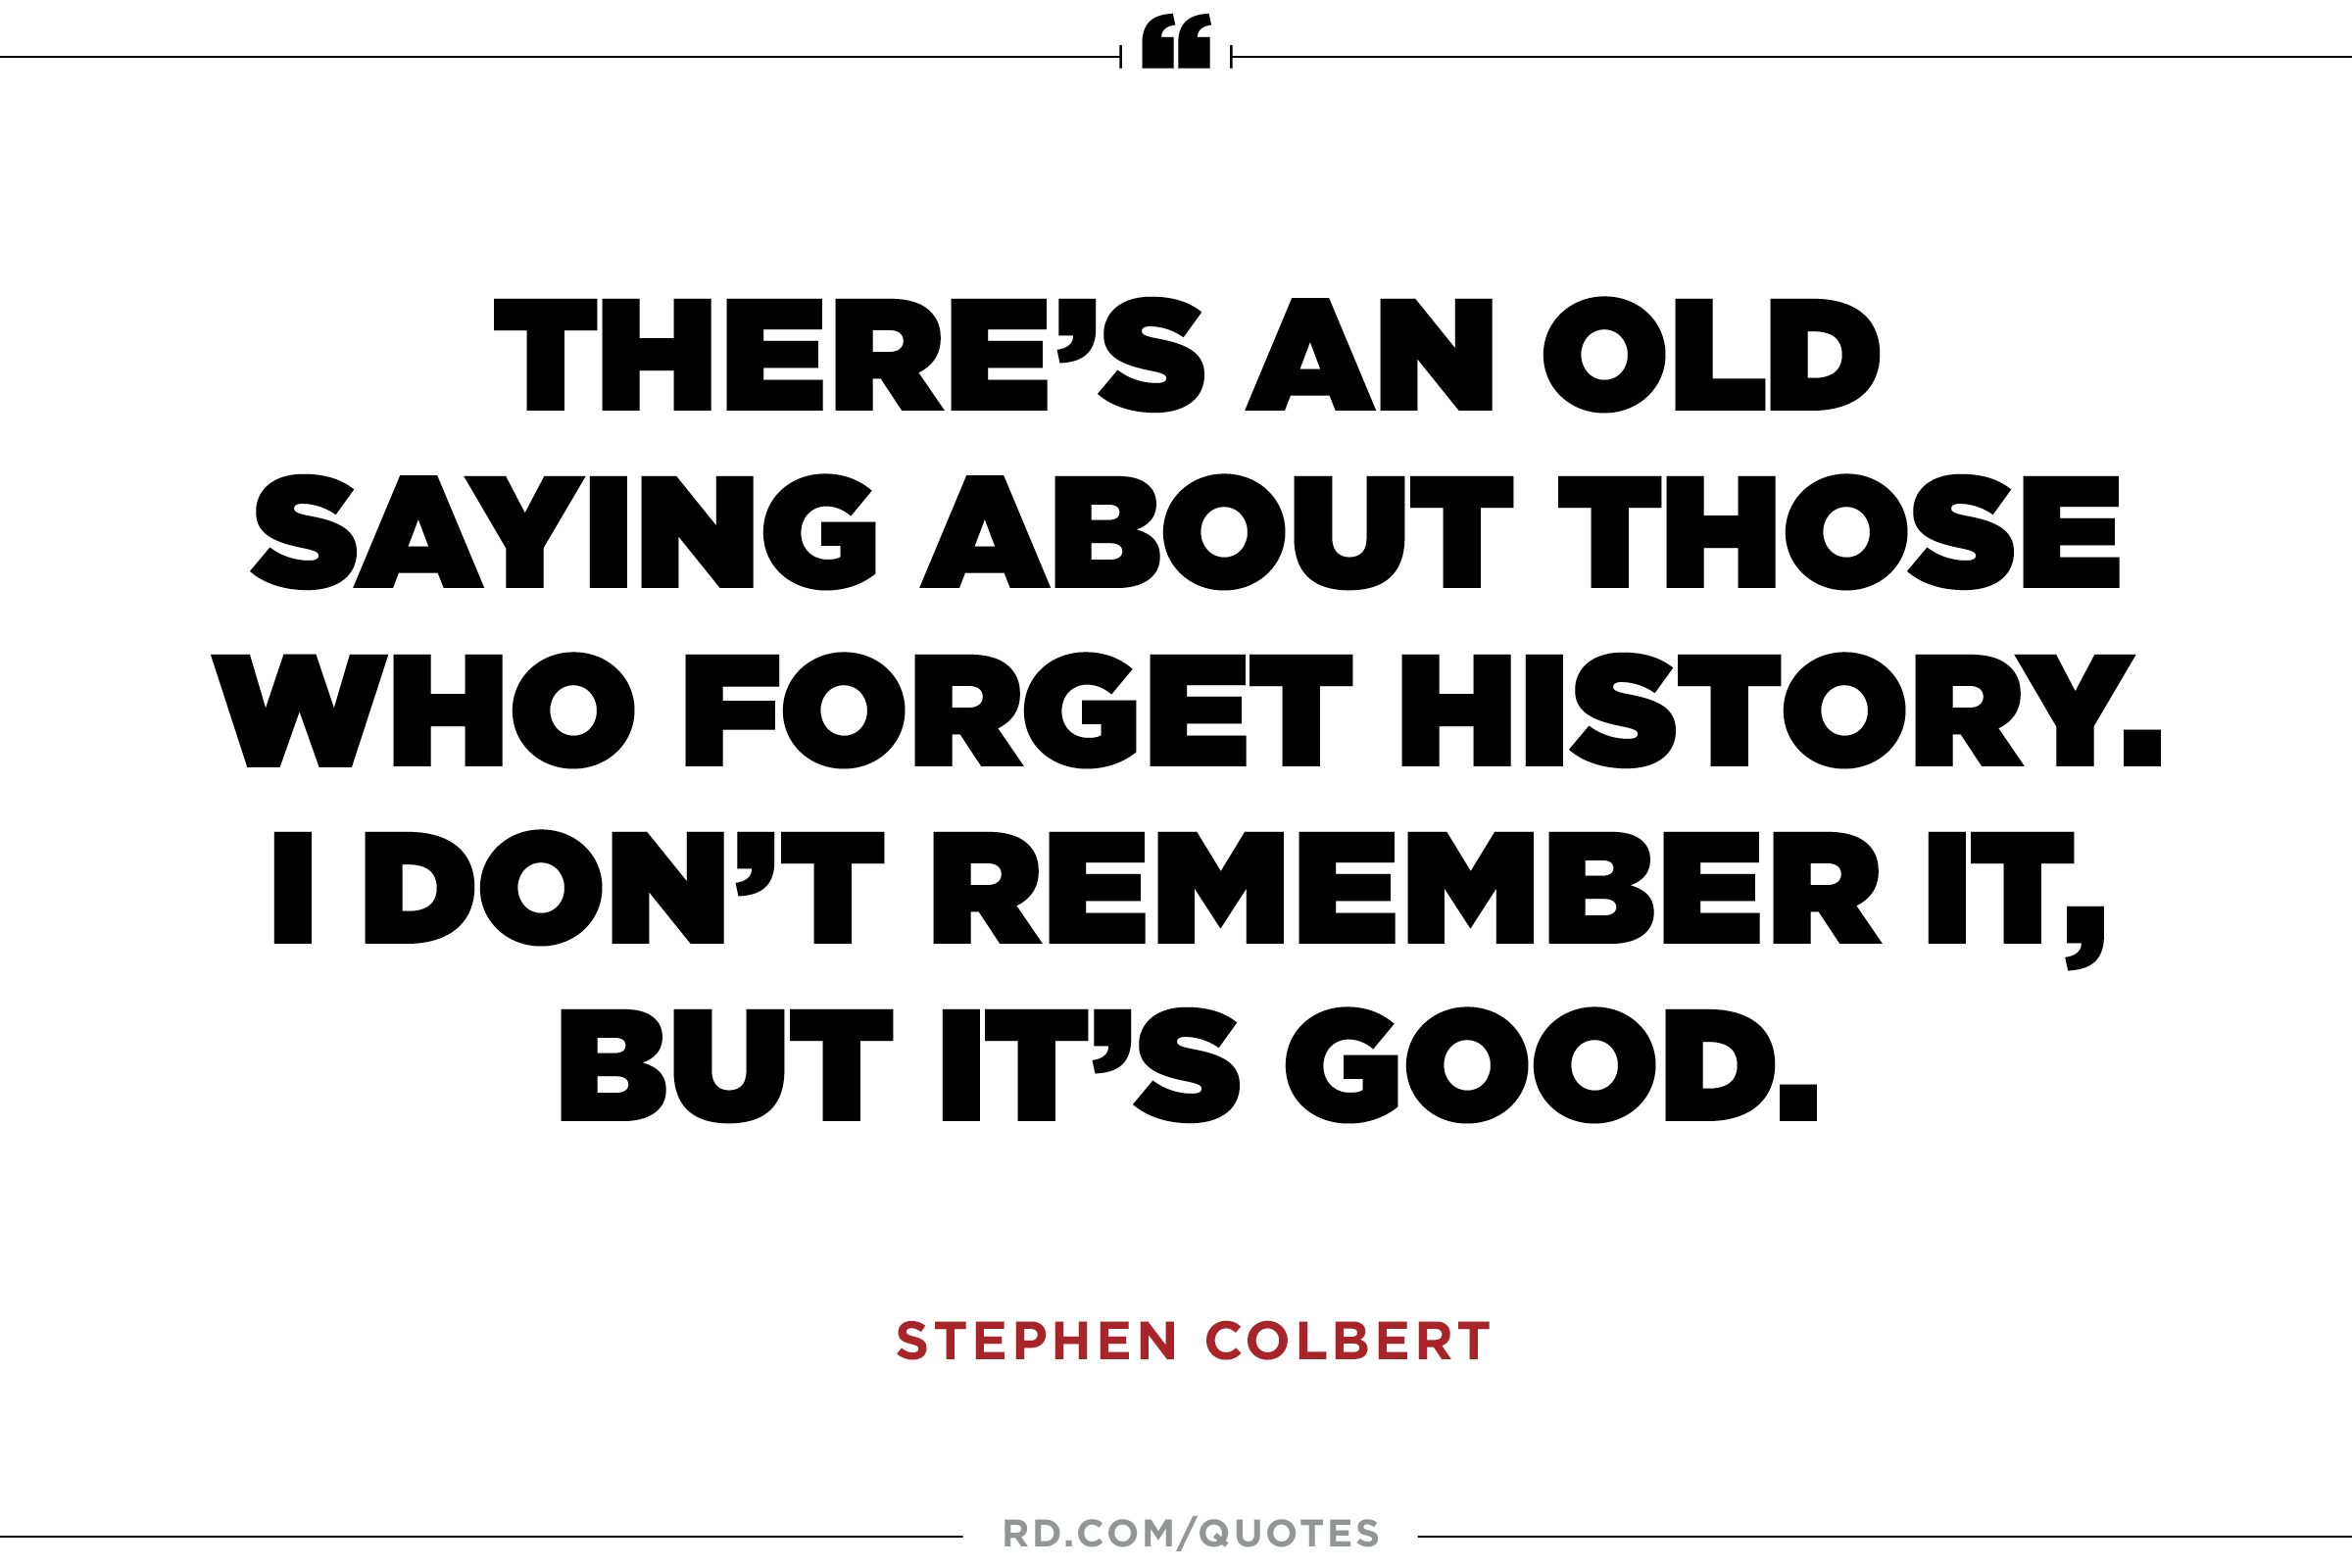 14 Best-Ever Stephen Colbert Quotes | Reader